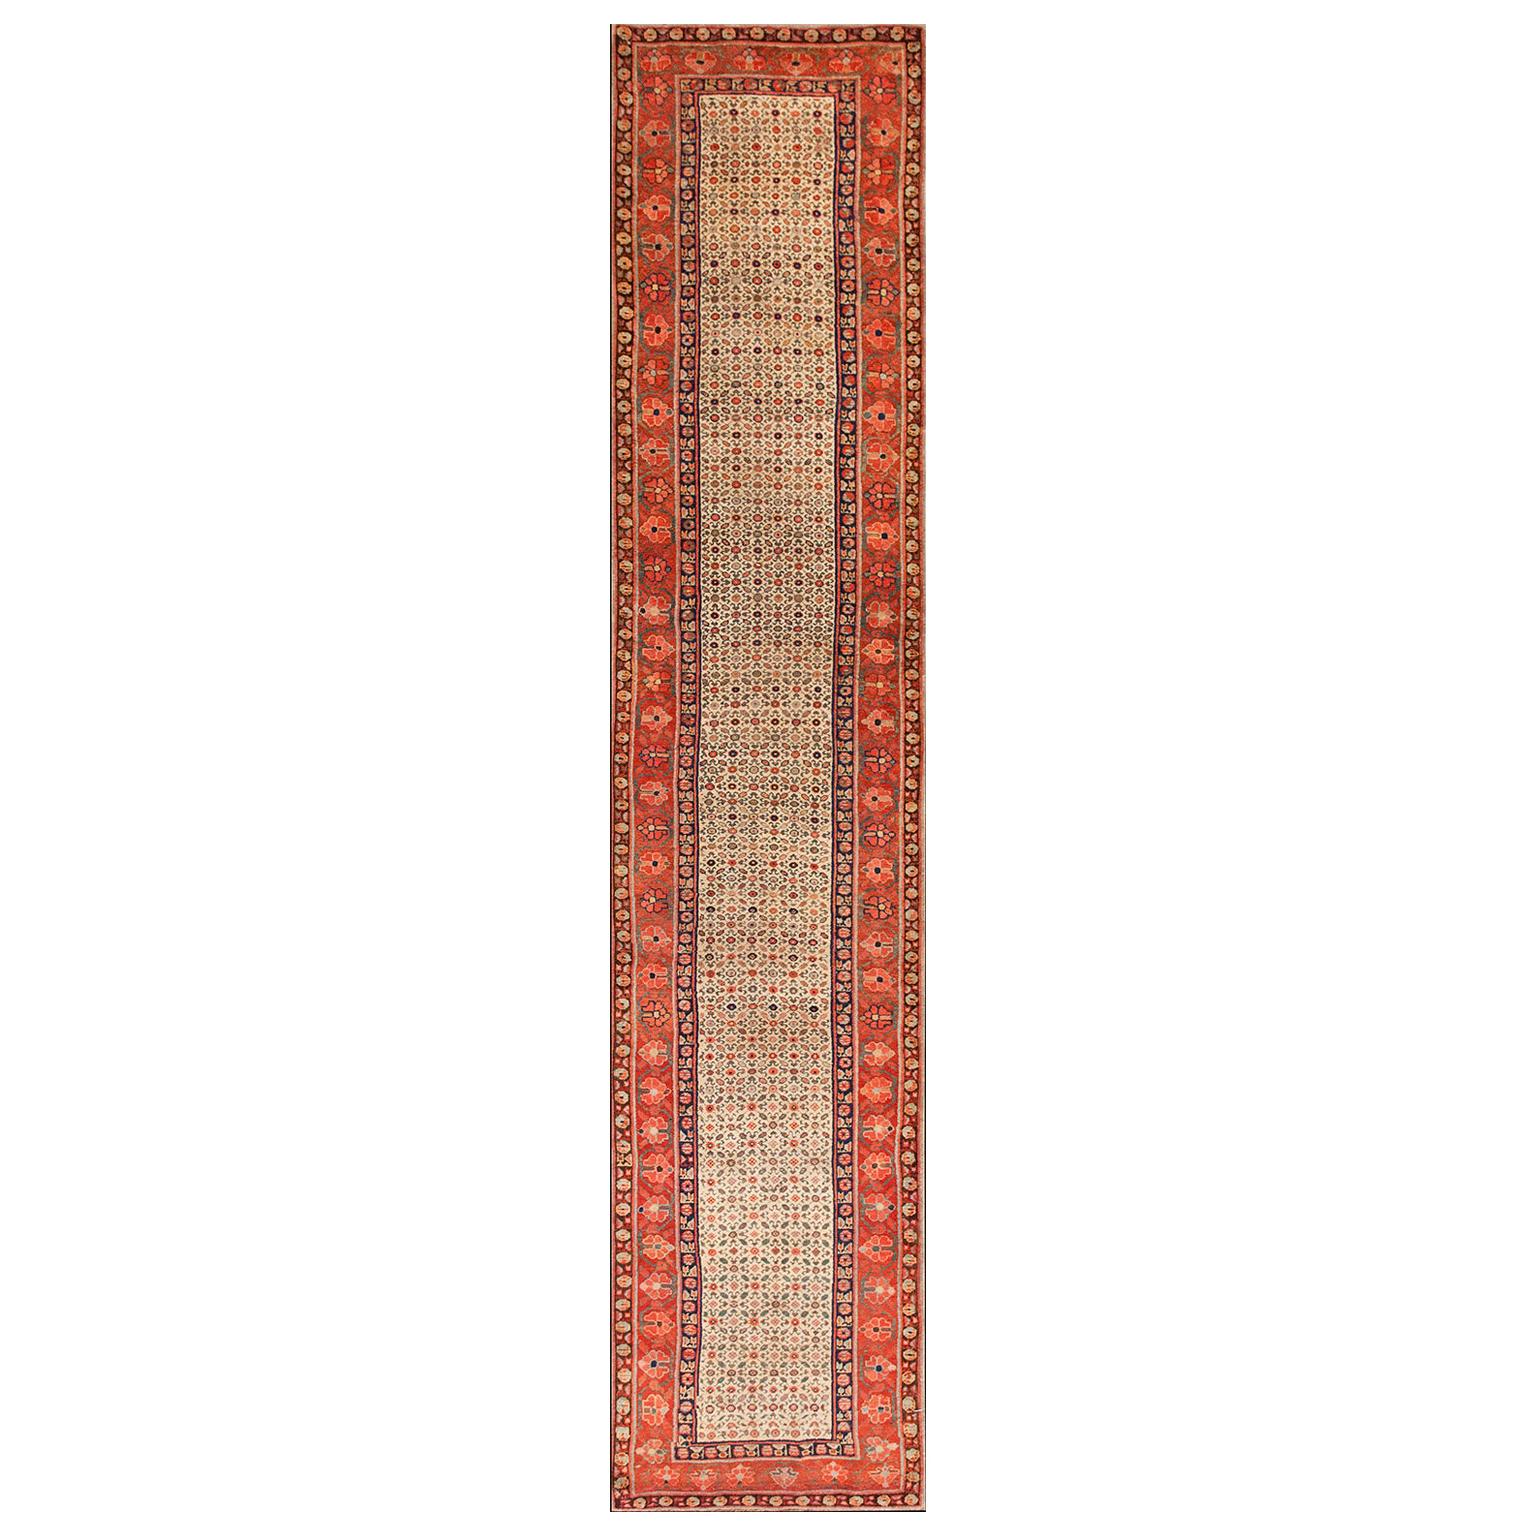 19th Century N.W. Persian Runner Carpet ( 3' x 14'6" - 90 x 442 ) For Sale